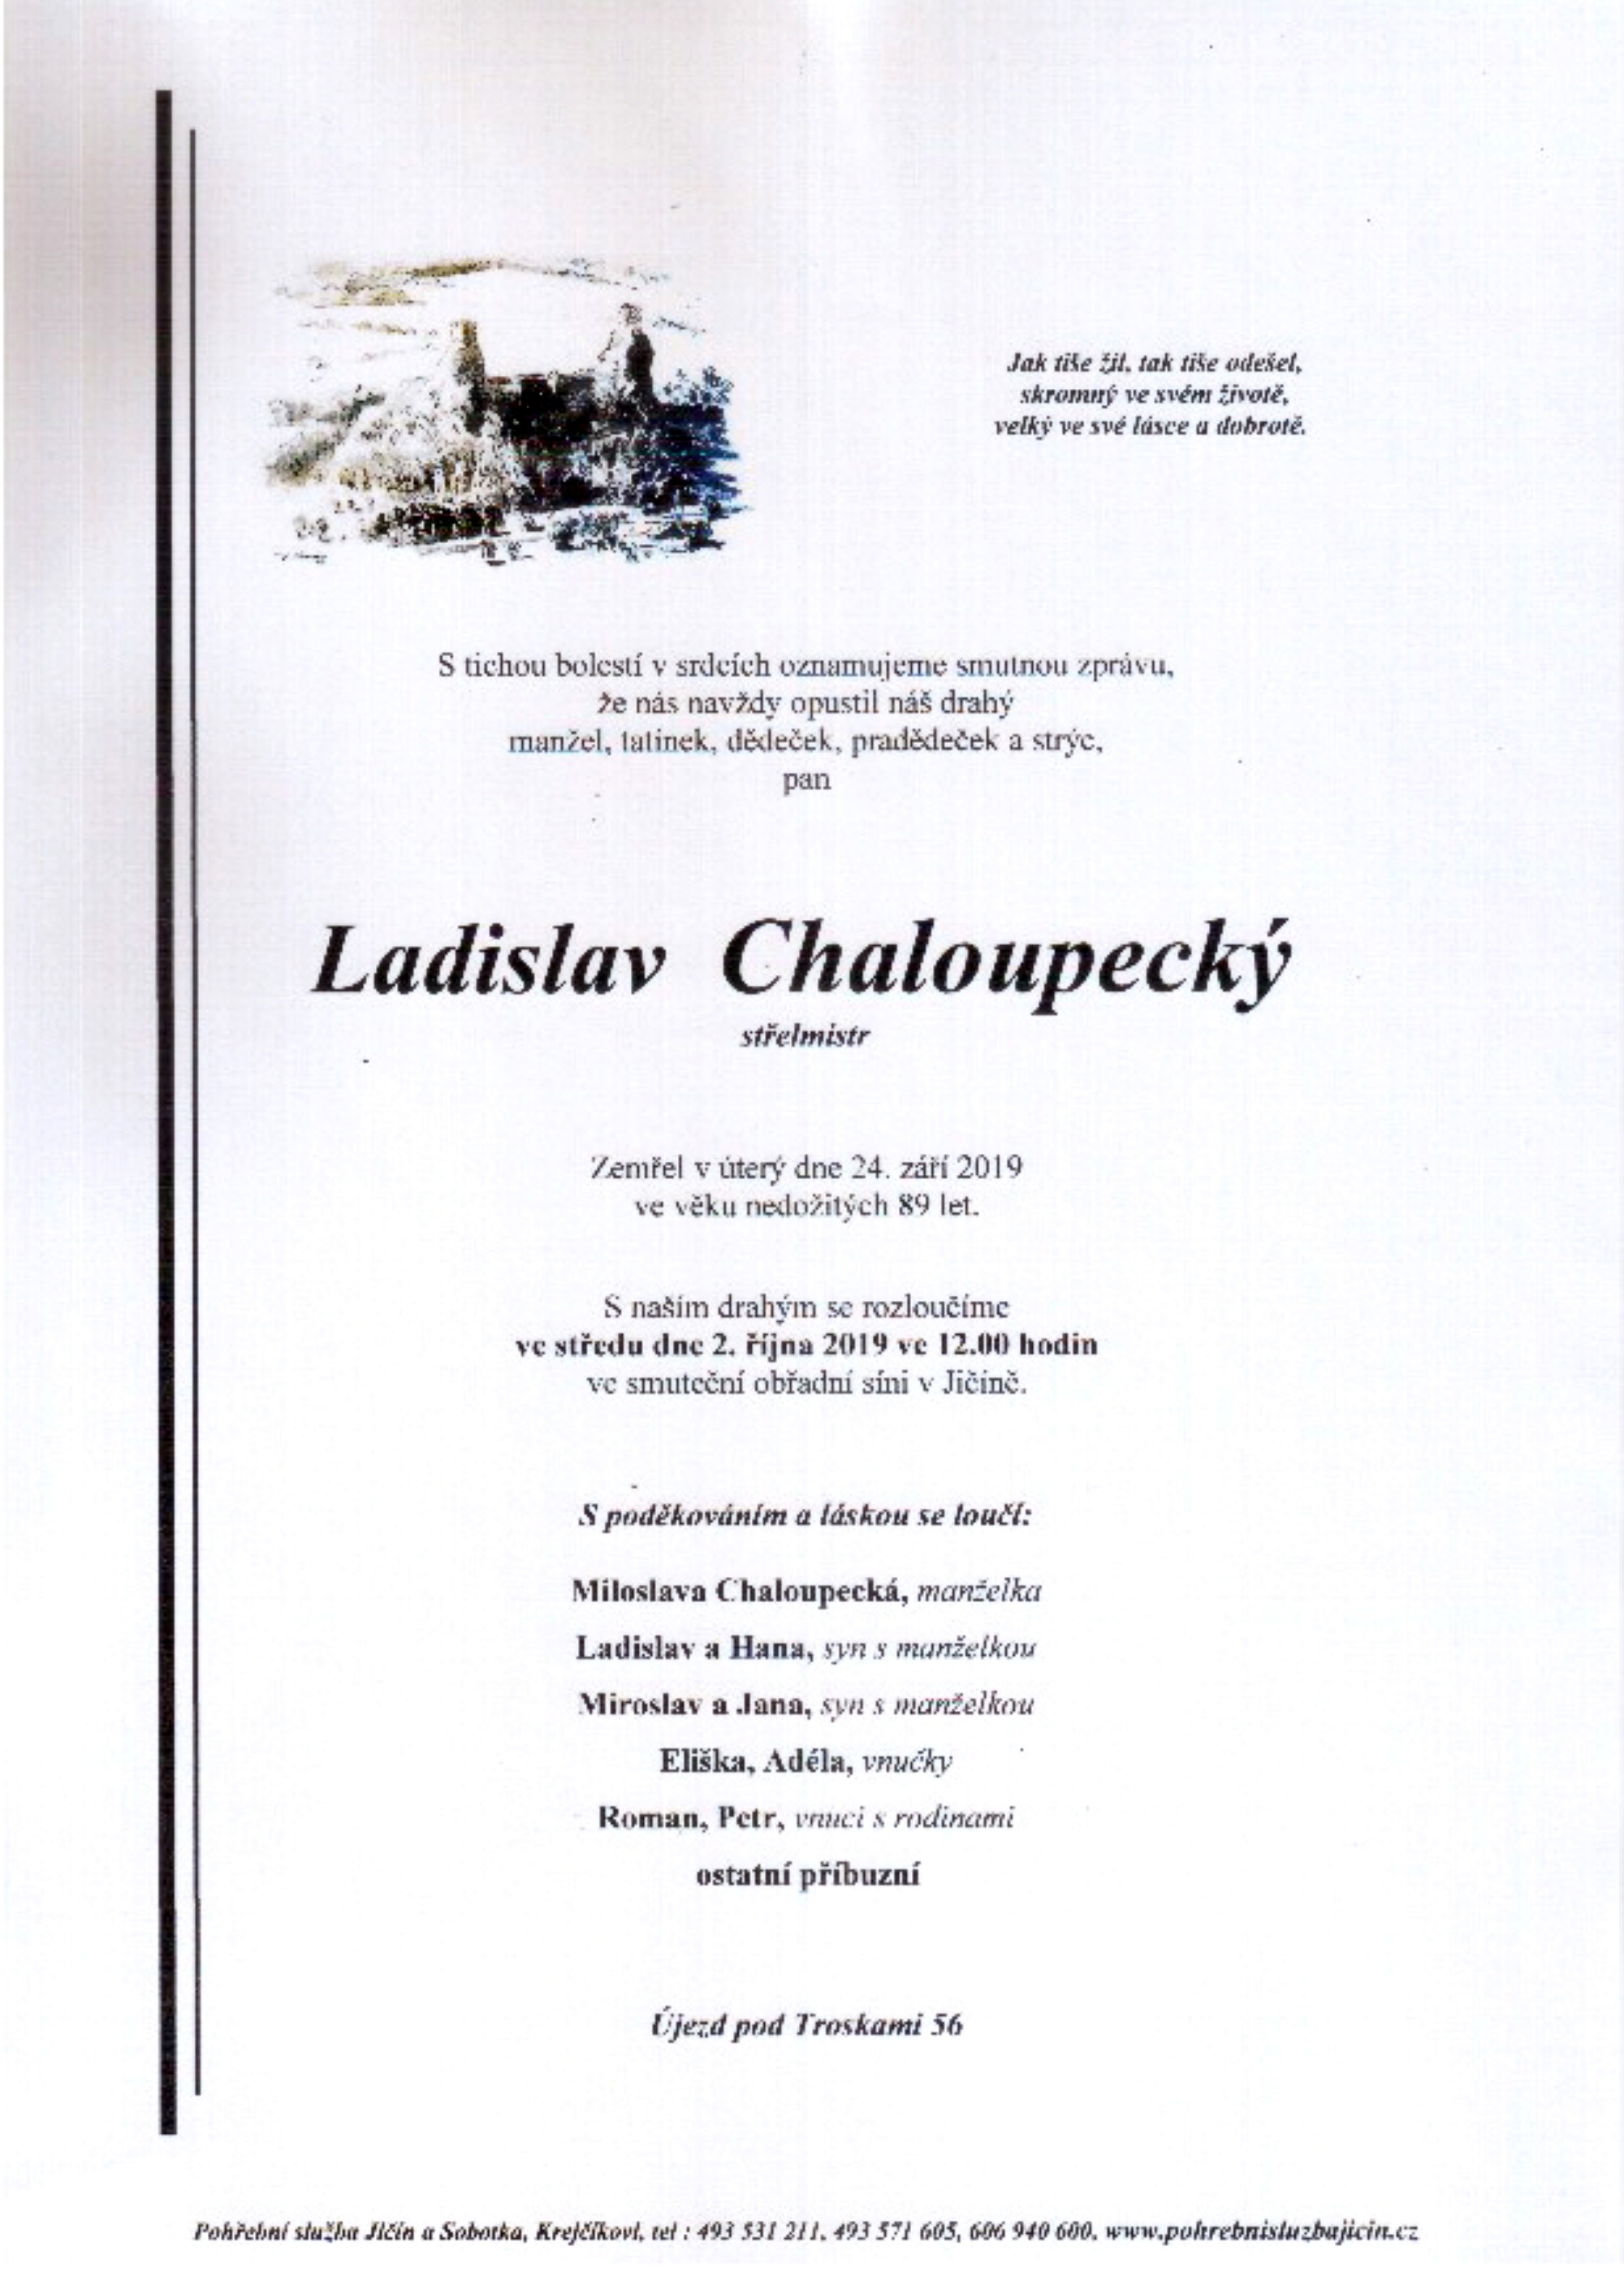 Ladislav Chaloupecký